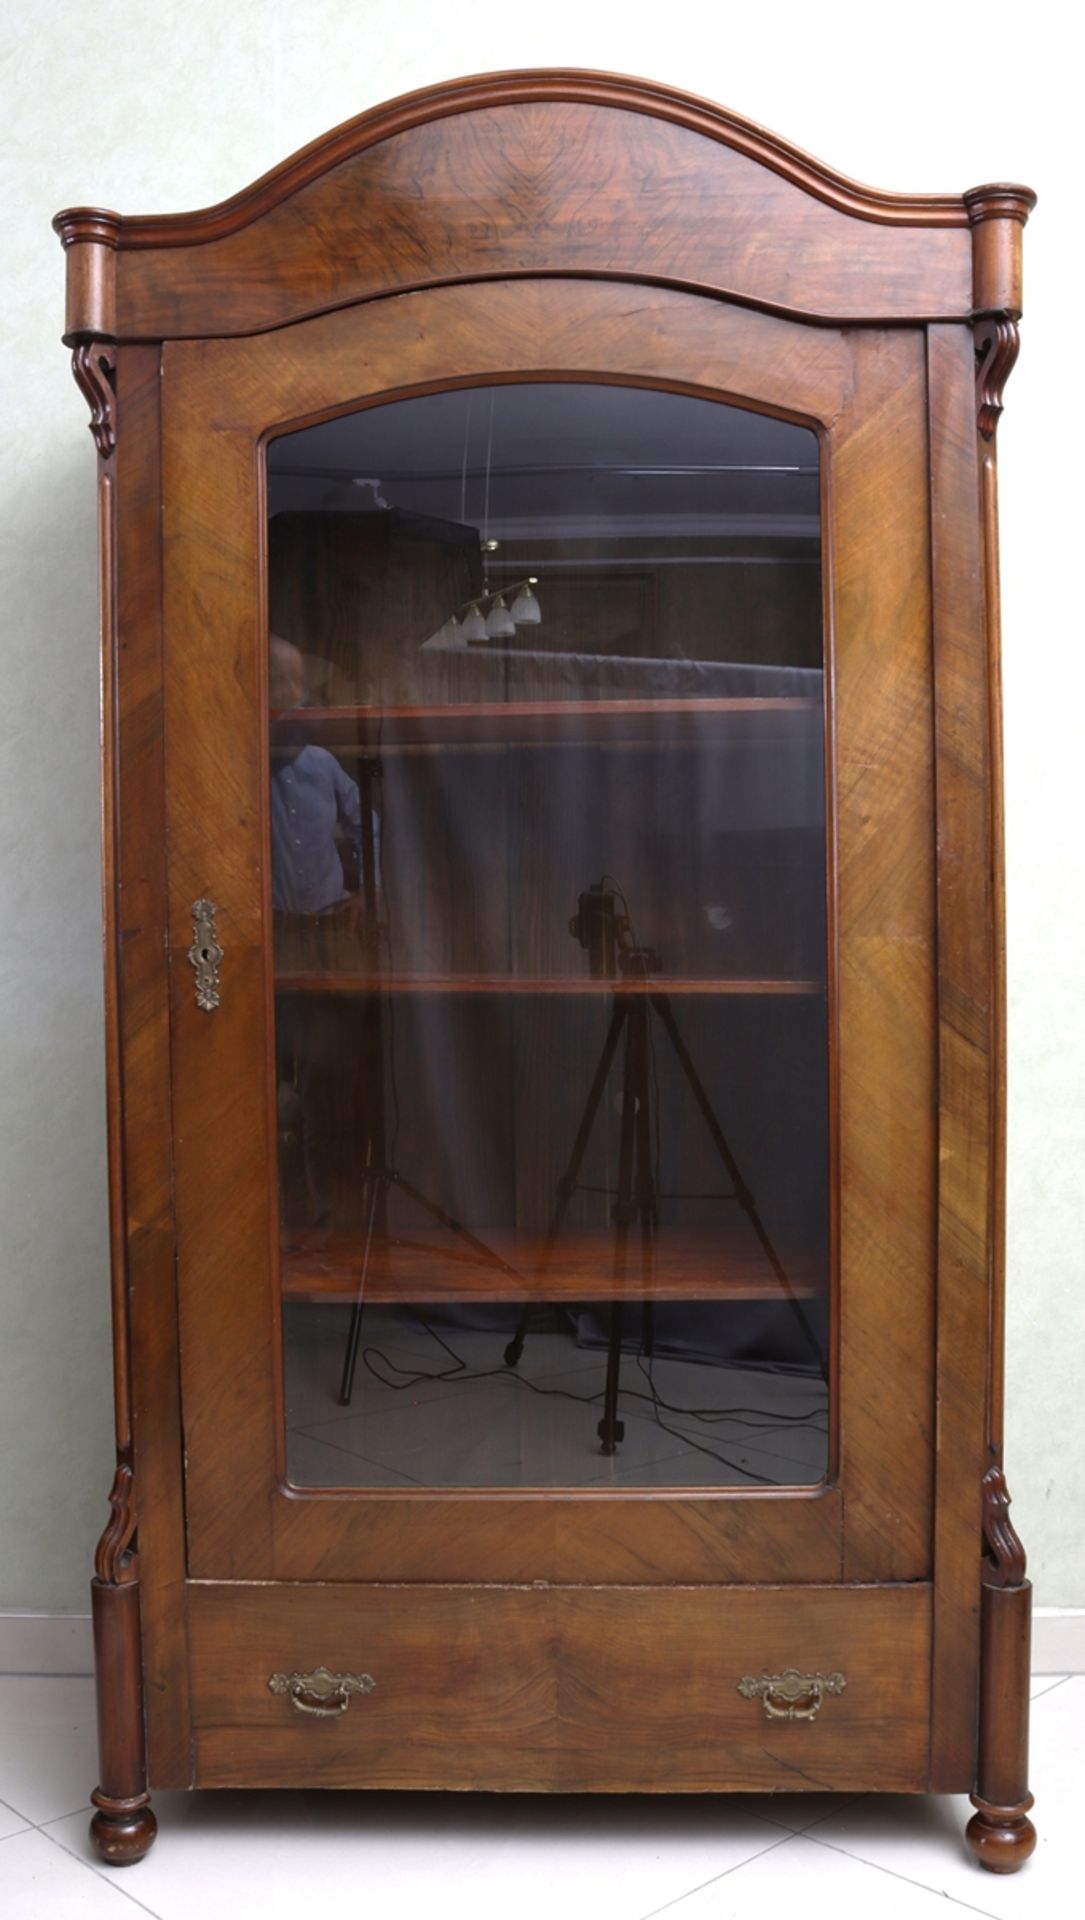 Single-door glass display cabinet circa 1860, Middle German